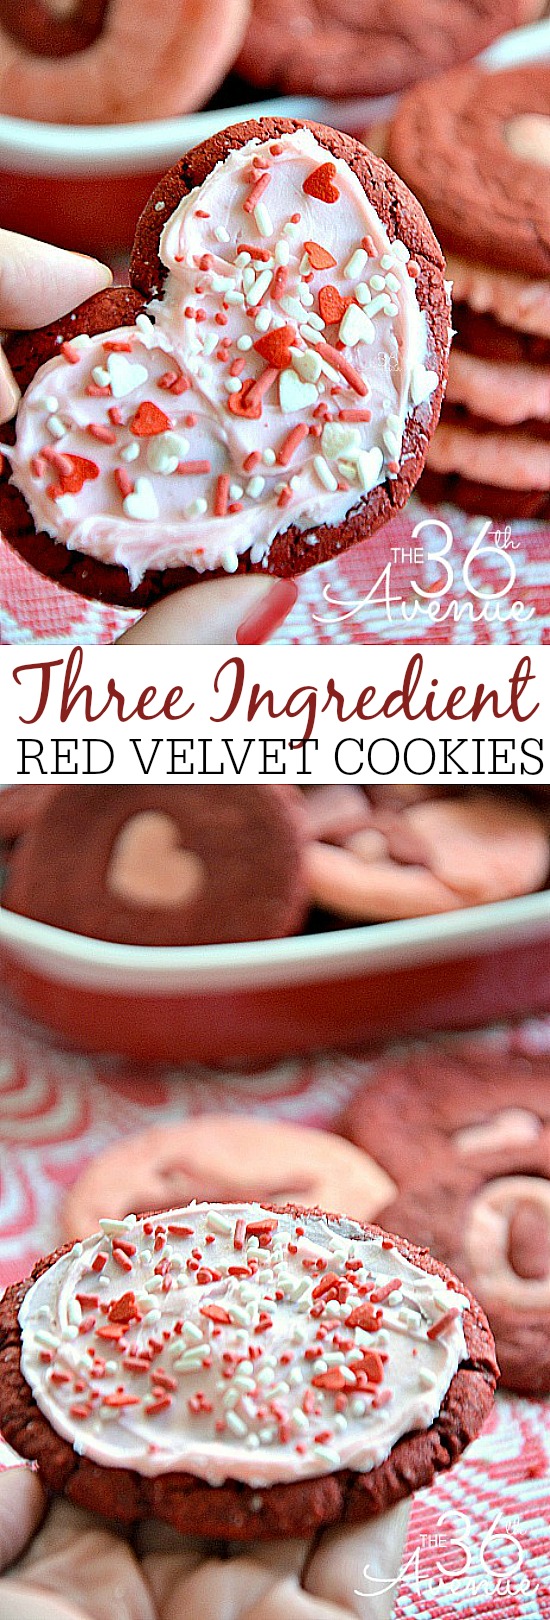 Recipes - Three Ingredient Red Velvet Cookies at the36thavenue.com